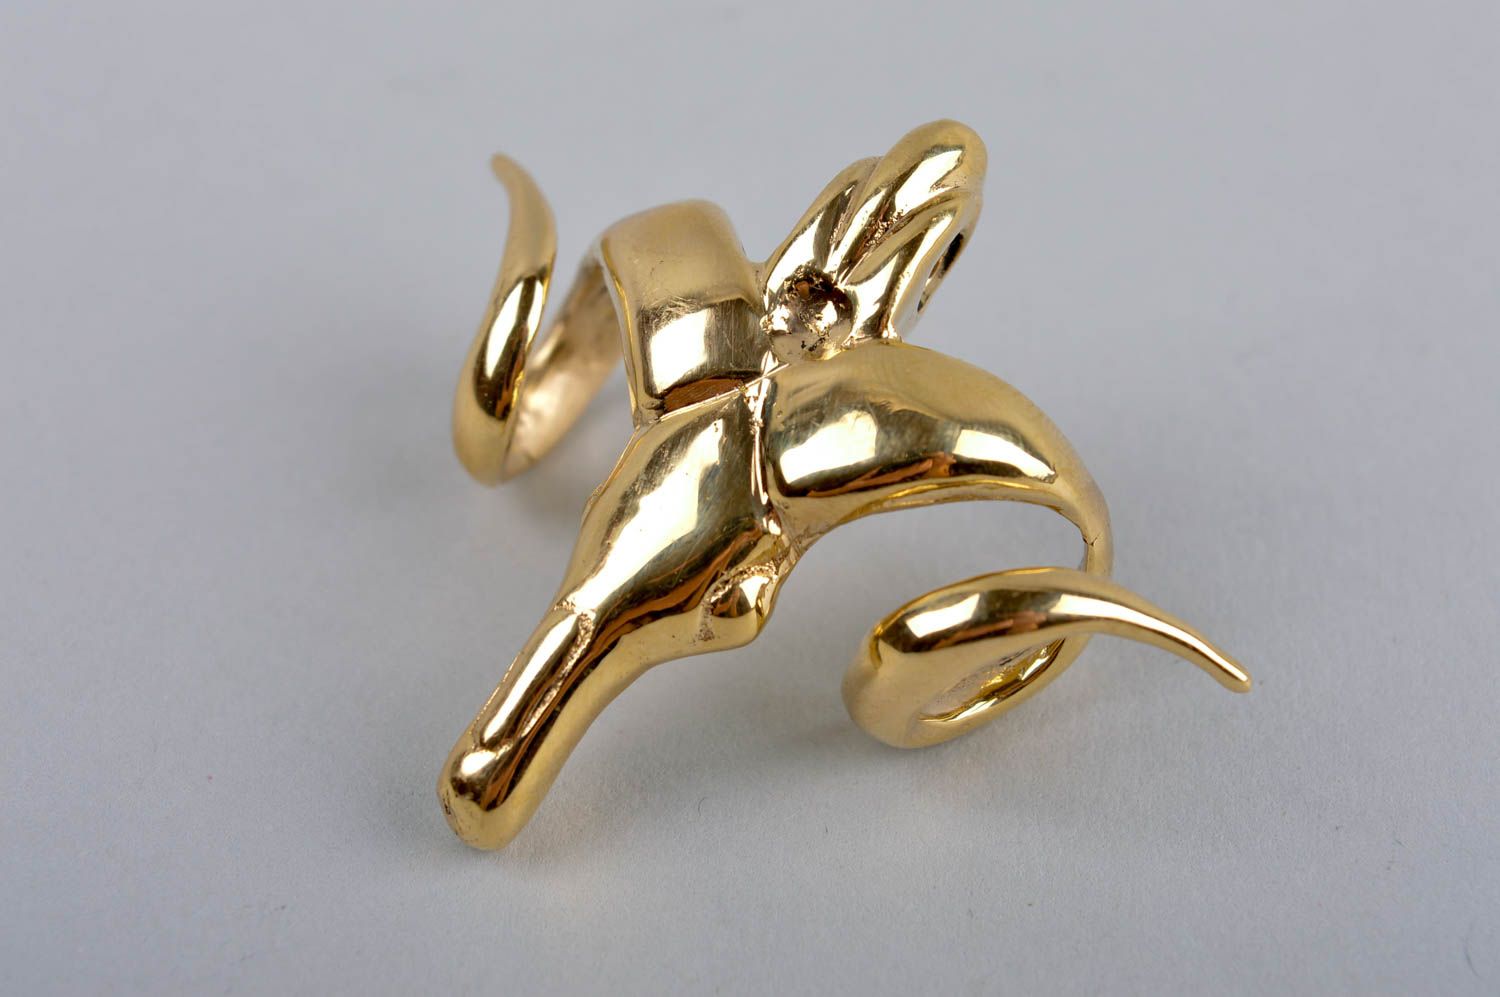 Handmade metal pendant unusual brass pendant stylish designer accessory photo 2